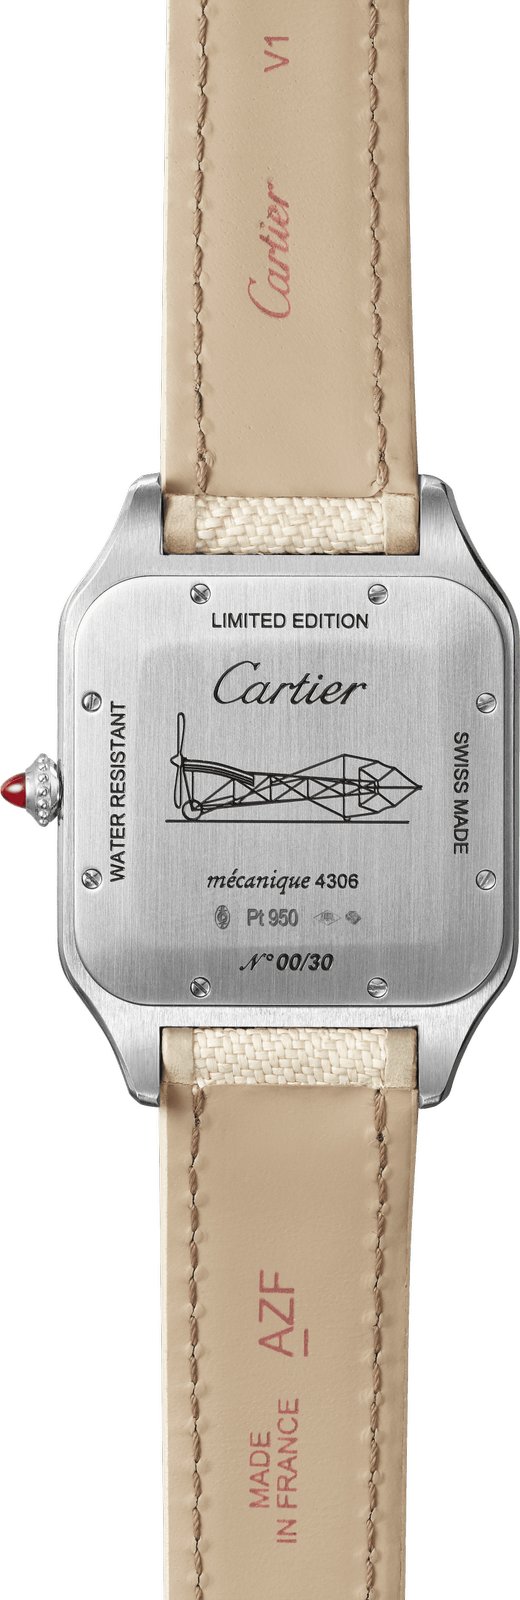 cartier engraving watch